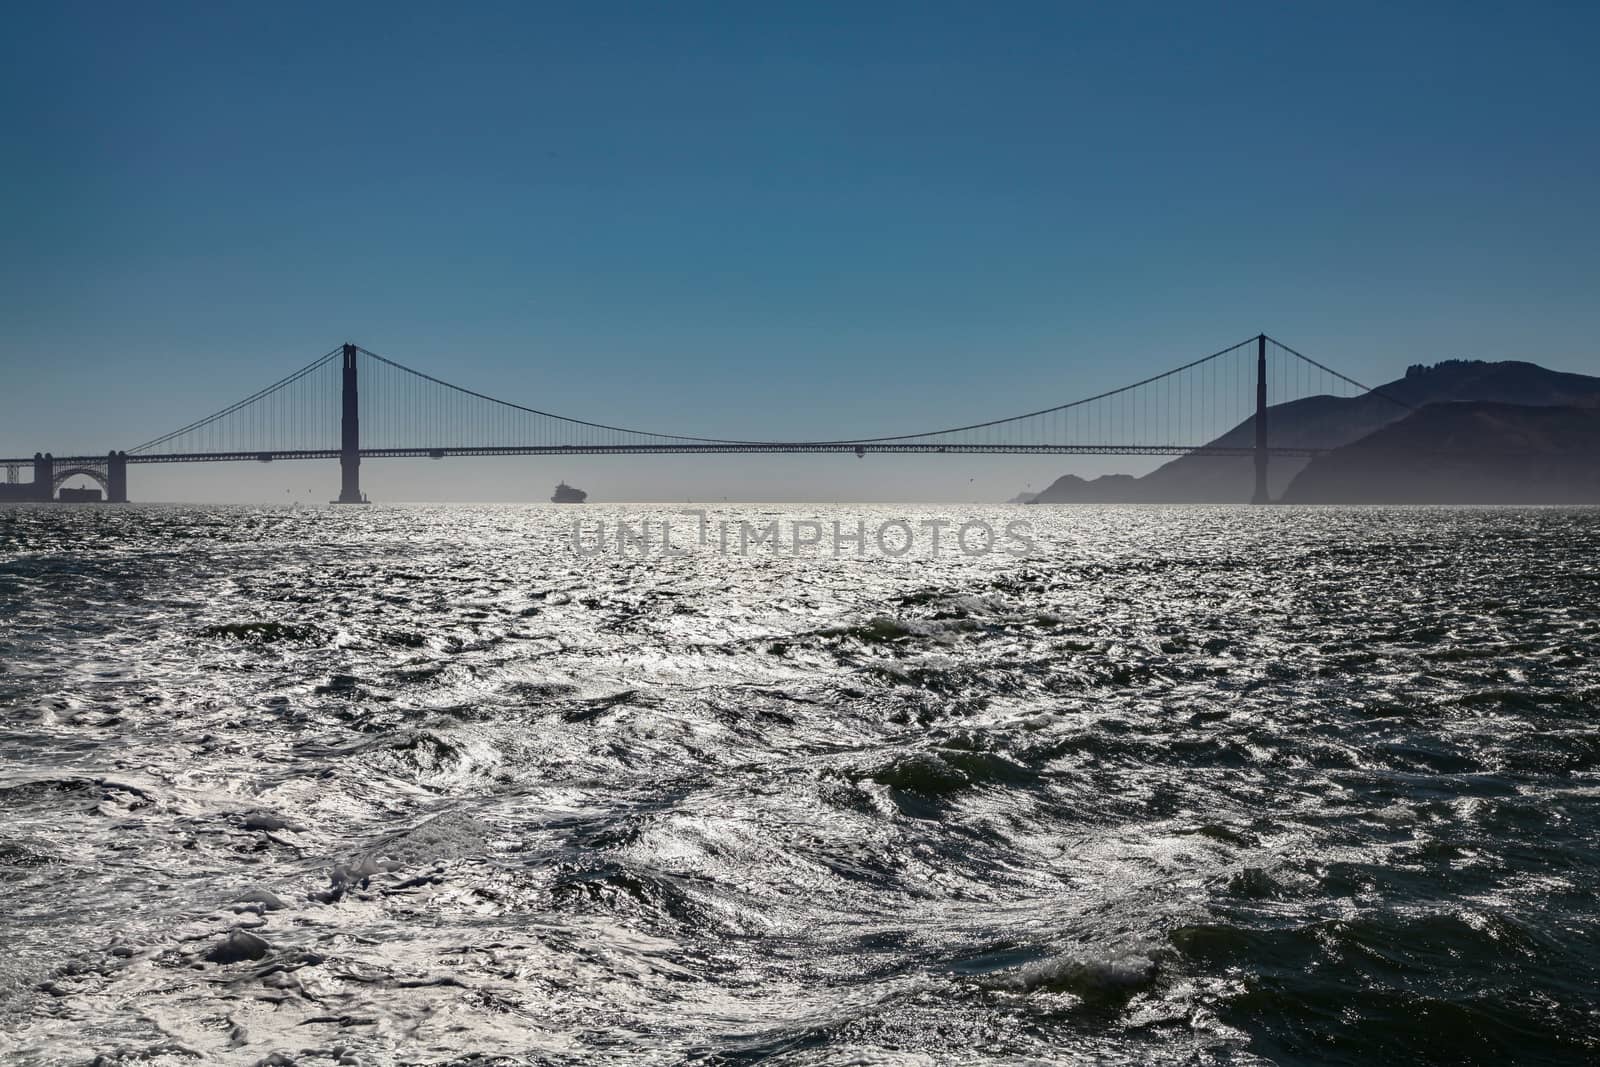 A silhouette of the Golden Gate Bridge